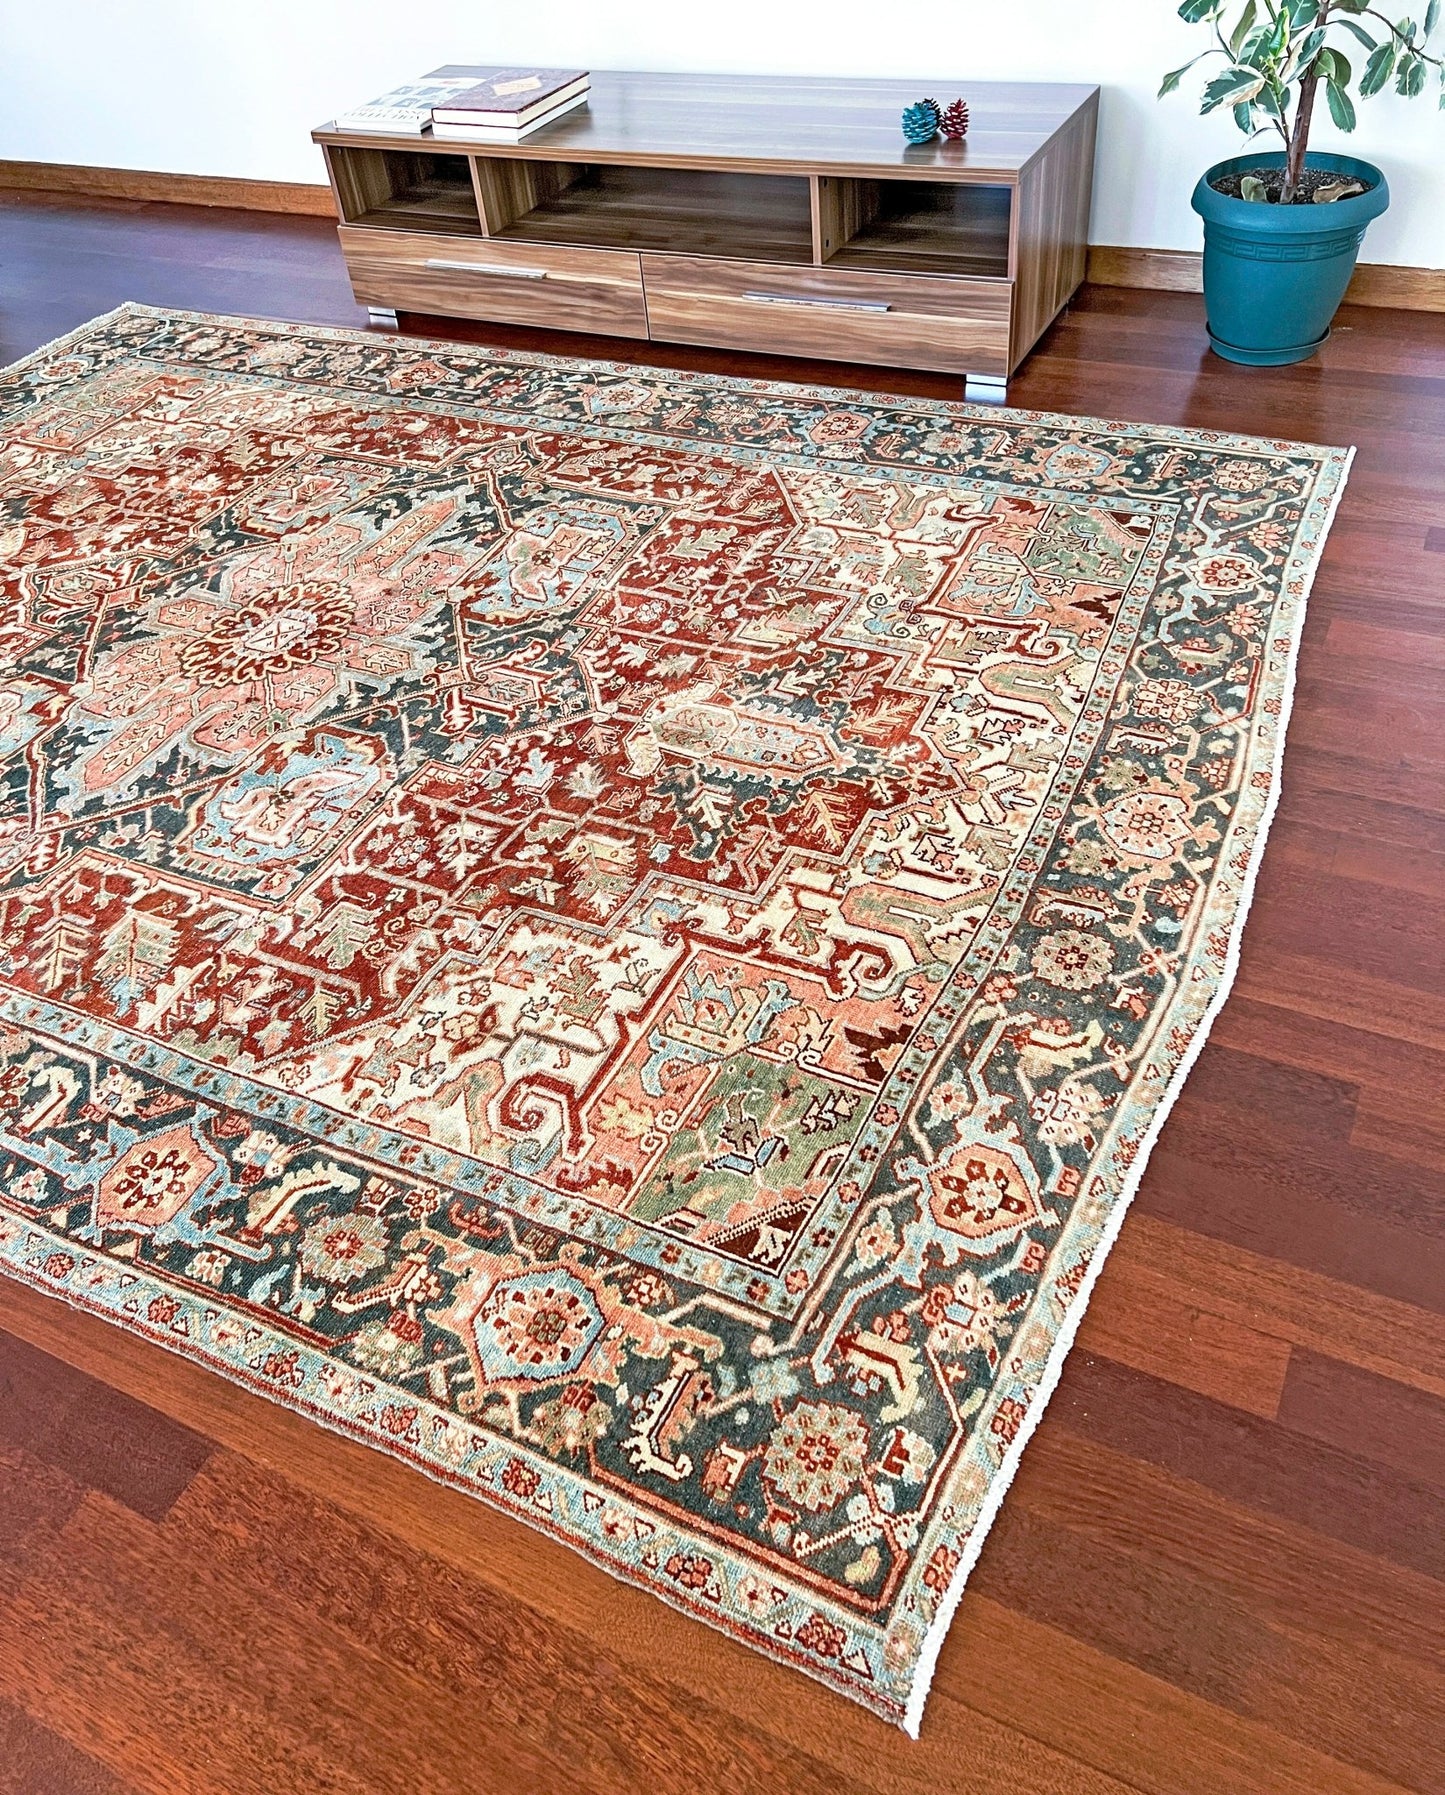 Large heriz persian area rug Oriental rug shop San francisco bay area. Buy oriental rug shop online free shipping